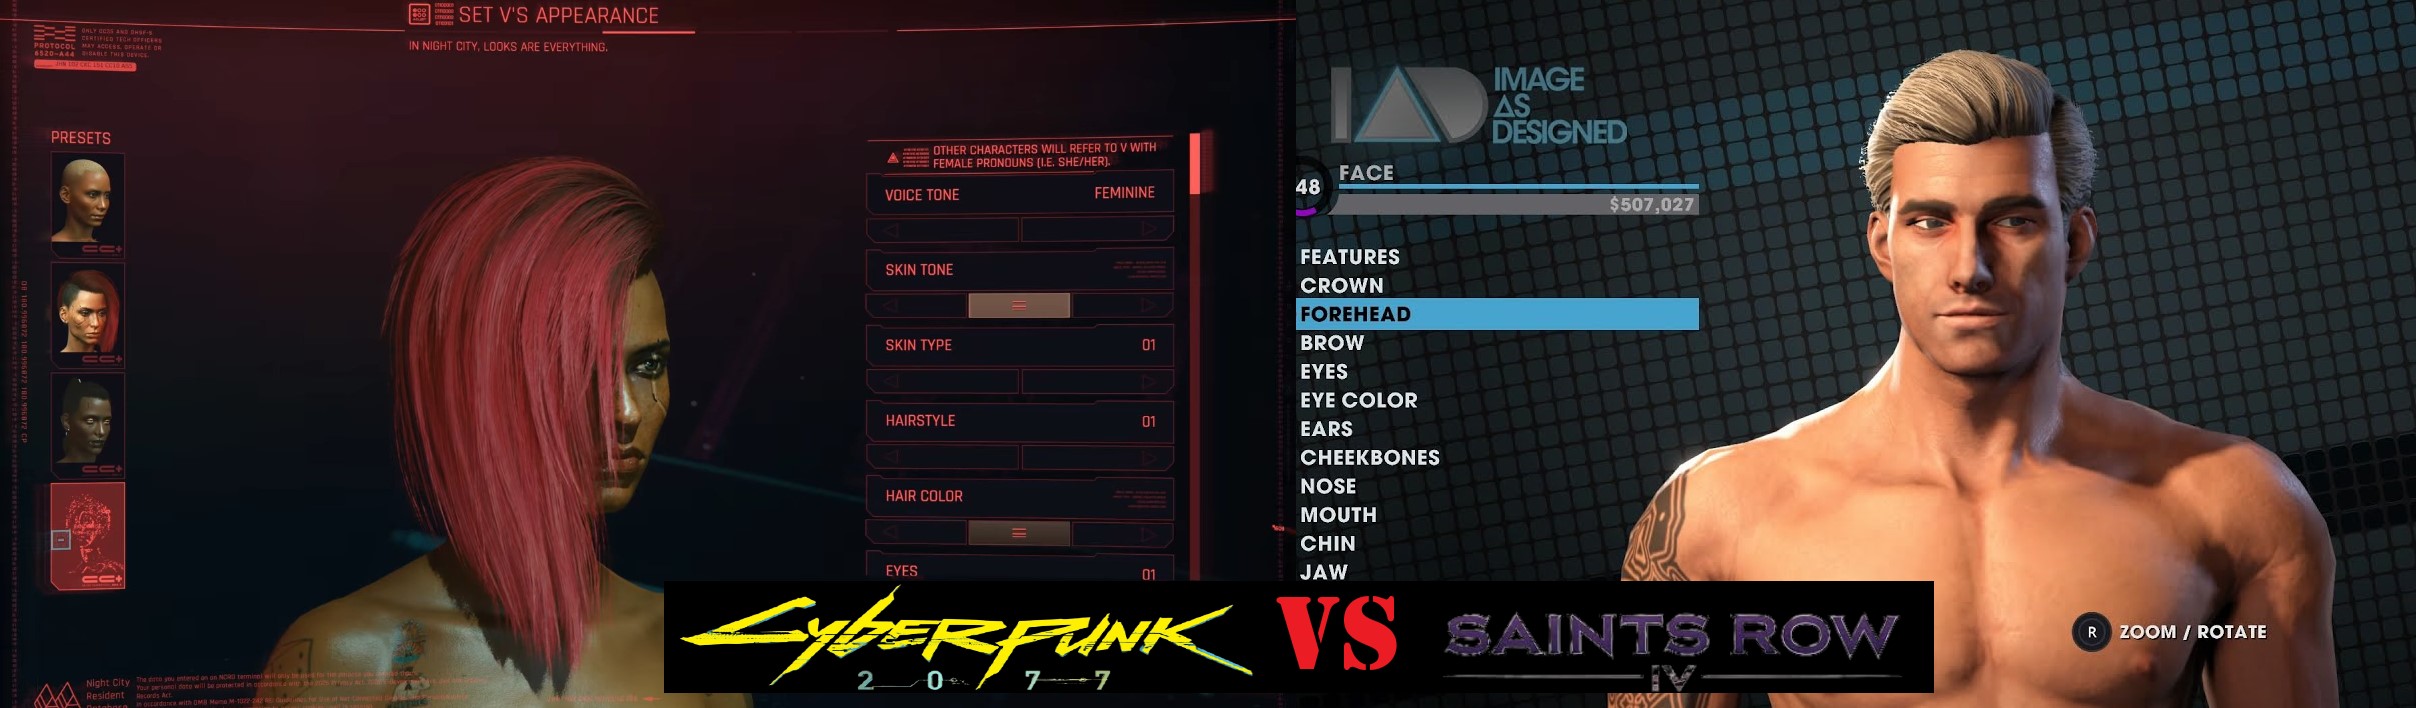 Comparison between Cyberpunk and Saints Row